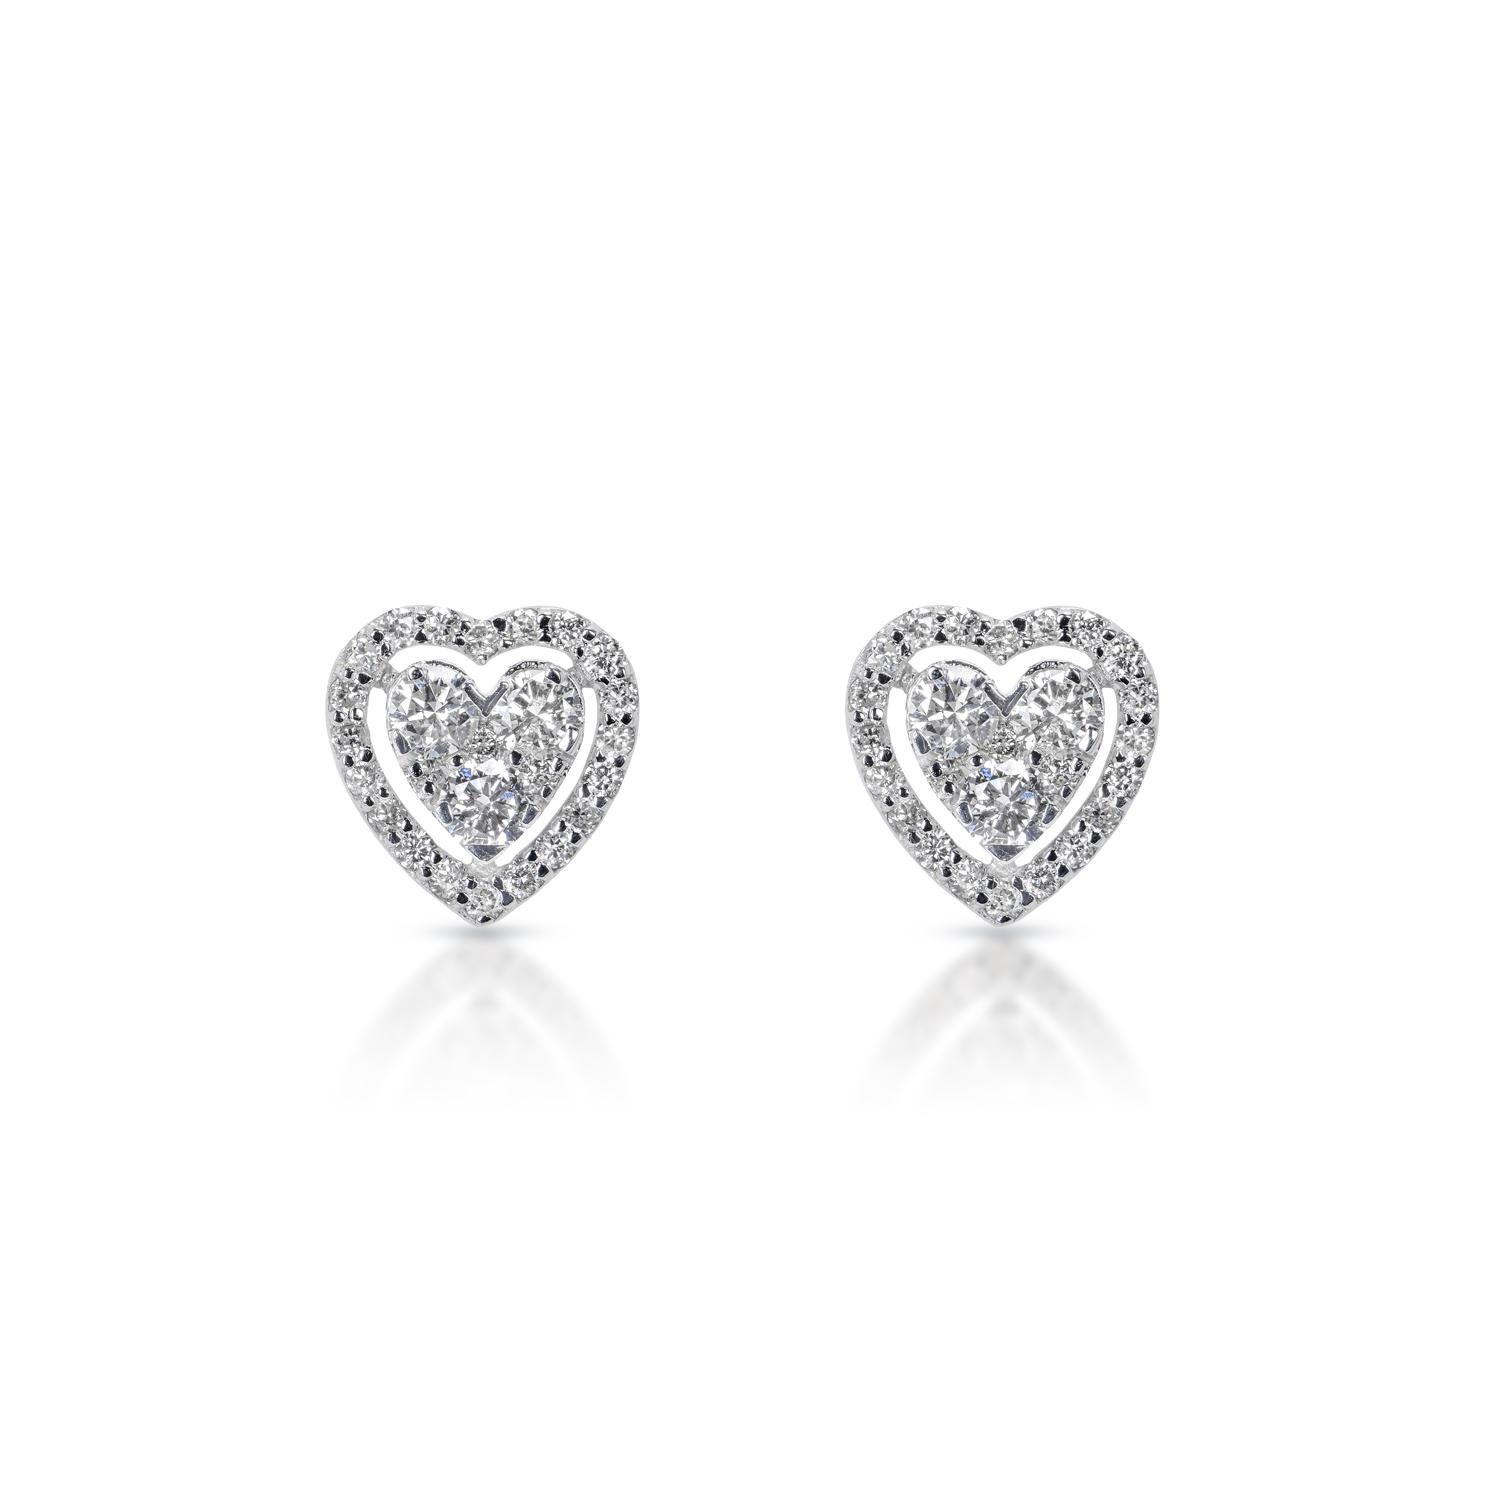 Heart Diamond Stud Earrings:

Carat Weight: 0.76 Carats
Shape: Round Brilliant Cut
Metal: 14 Karat White Gold
Style: Studs Earrings